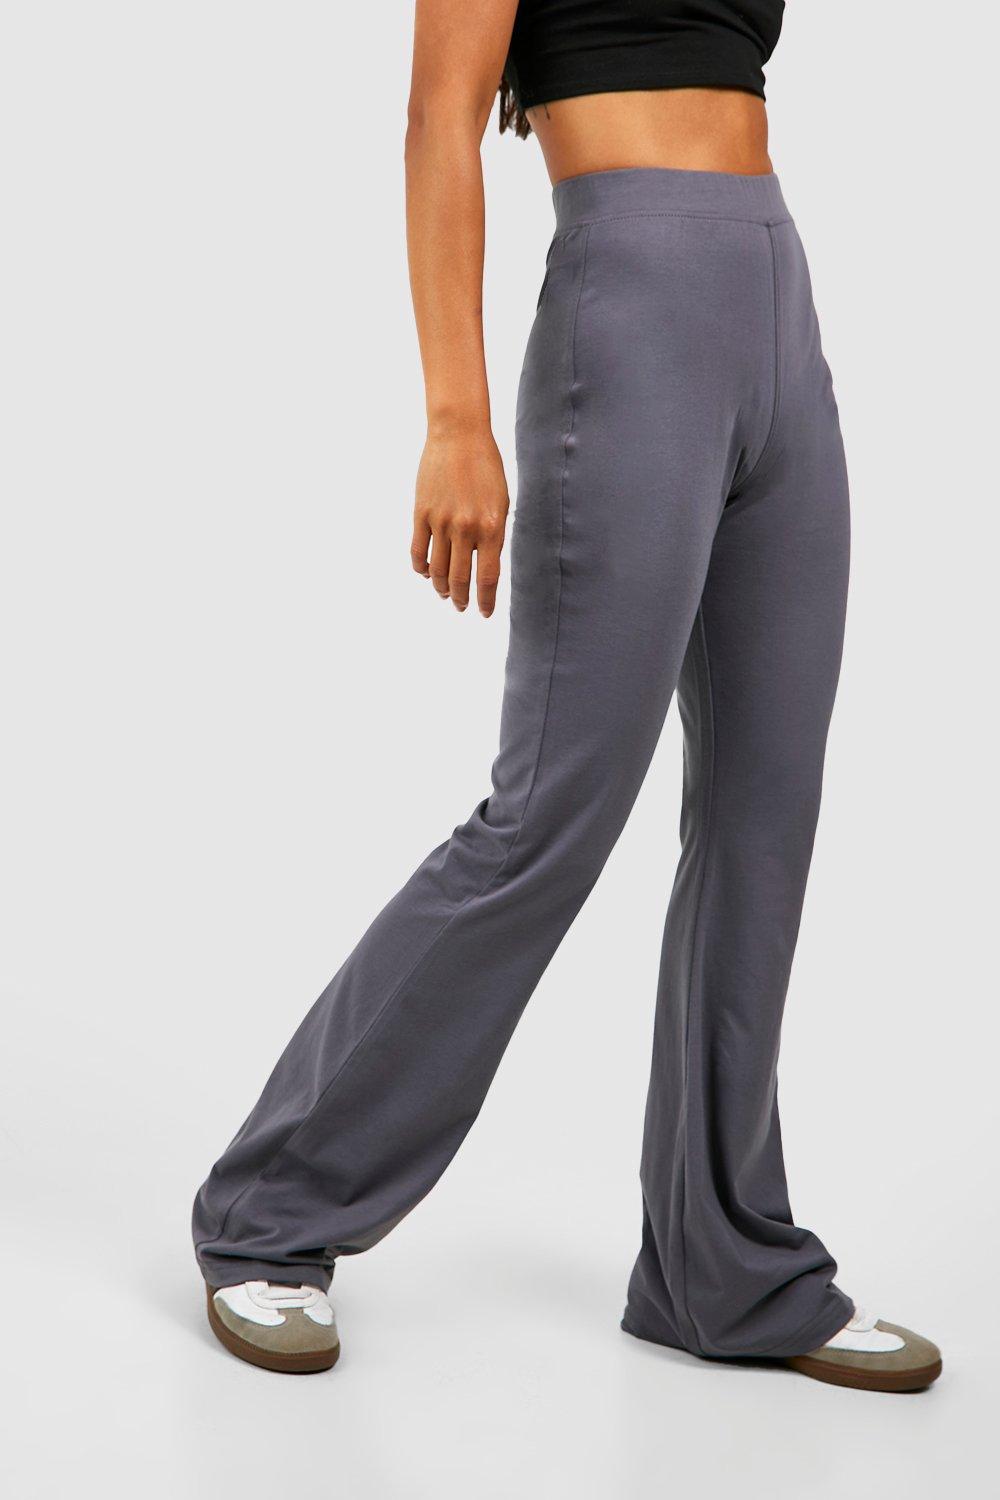 Flared Pants - Yoga Pants & Flared Pants - Free Exchange – Famme